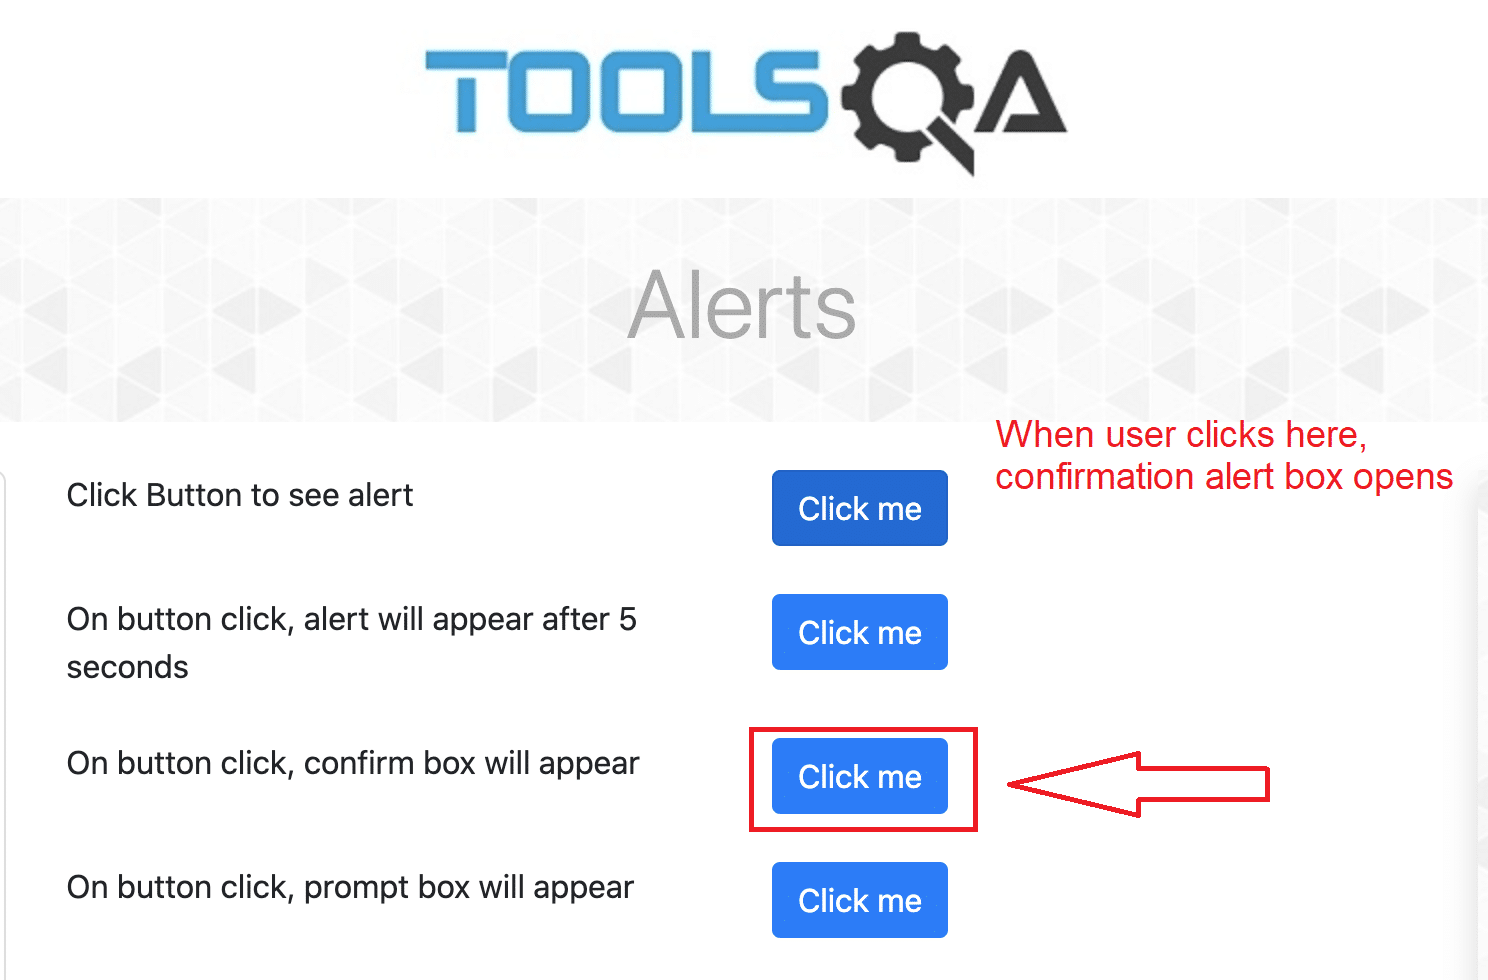 Confirmation alert box